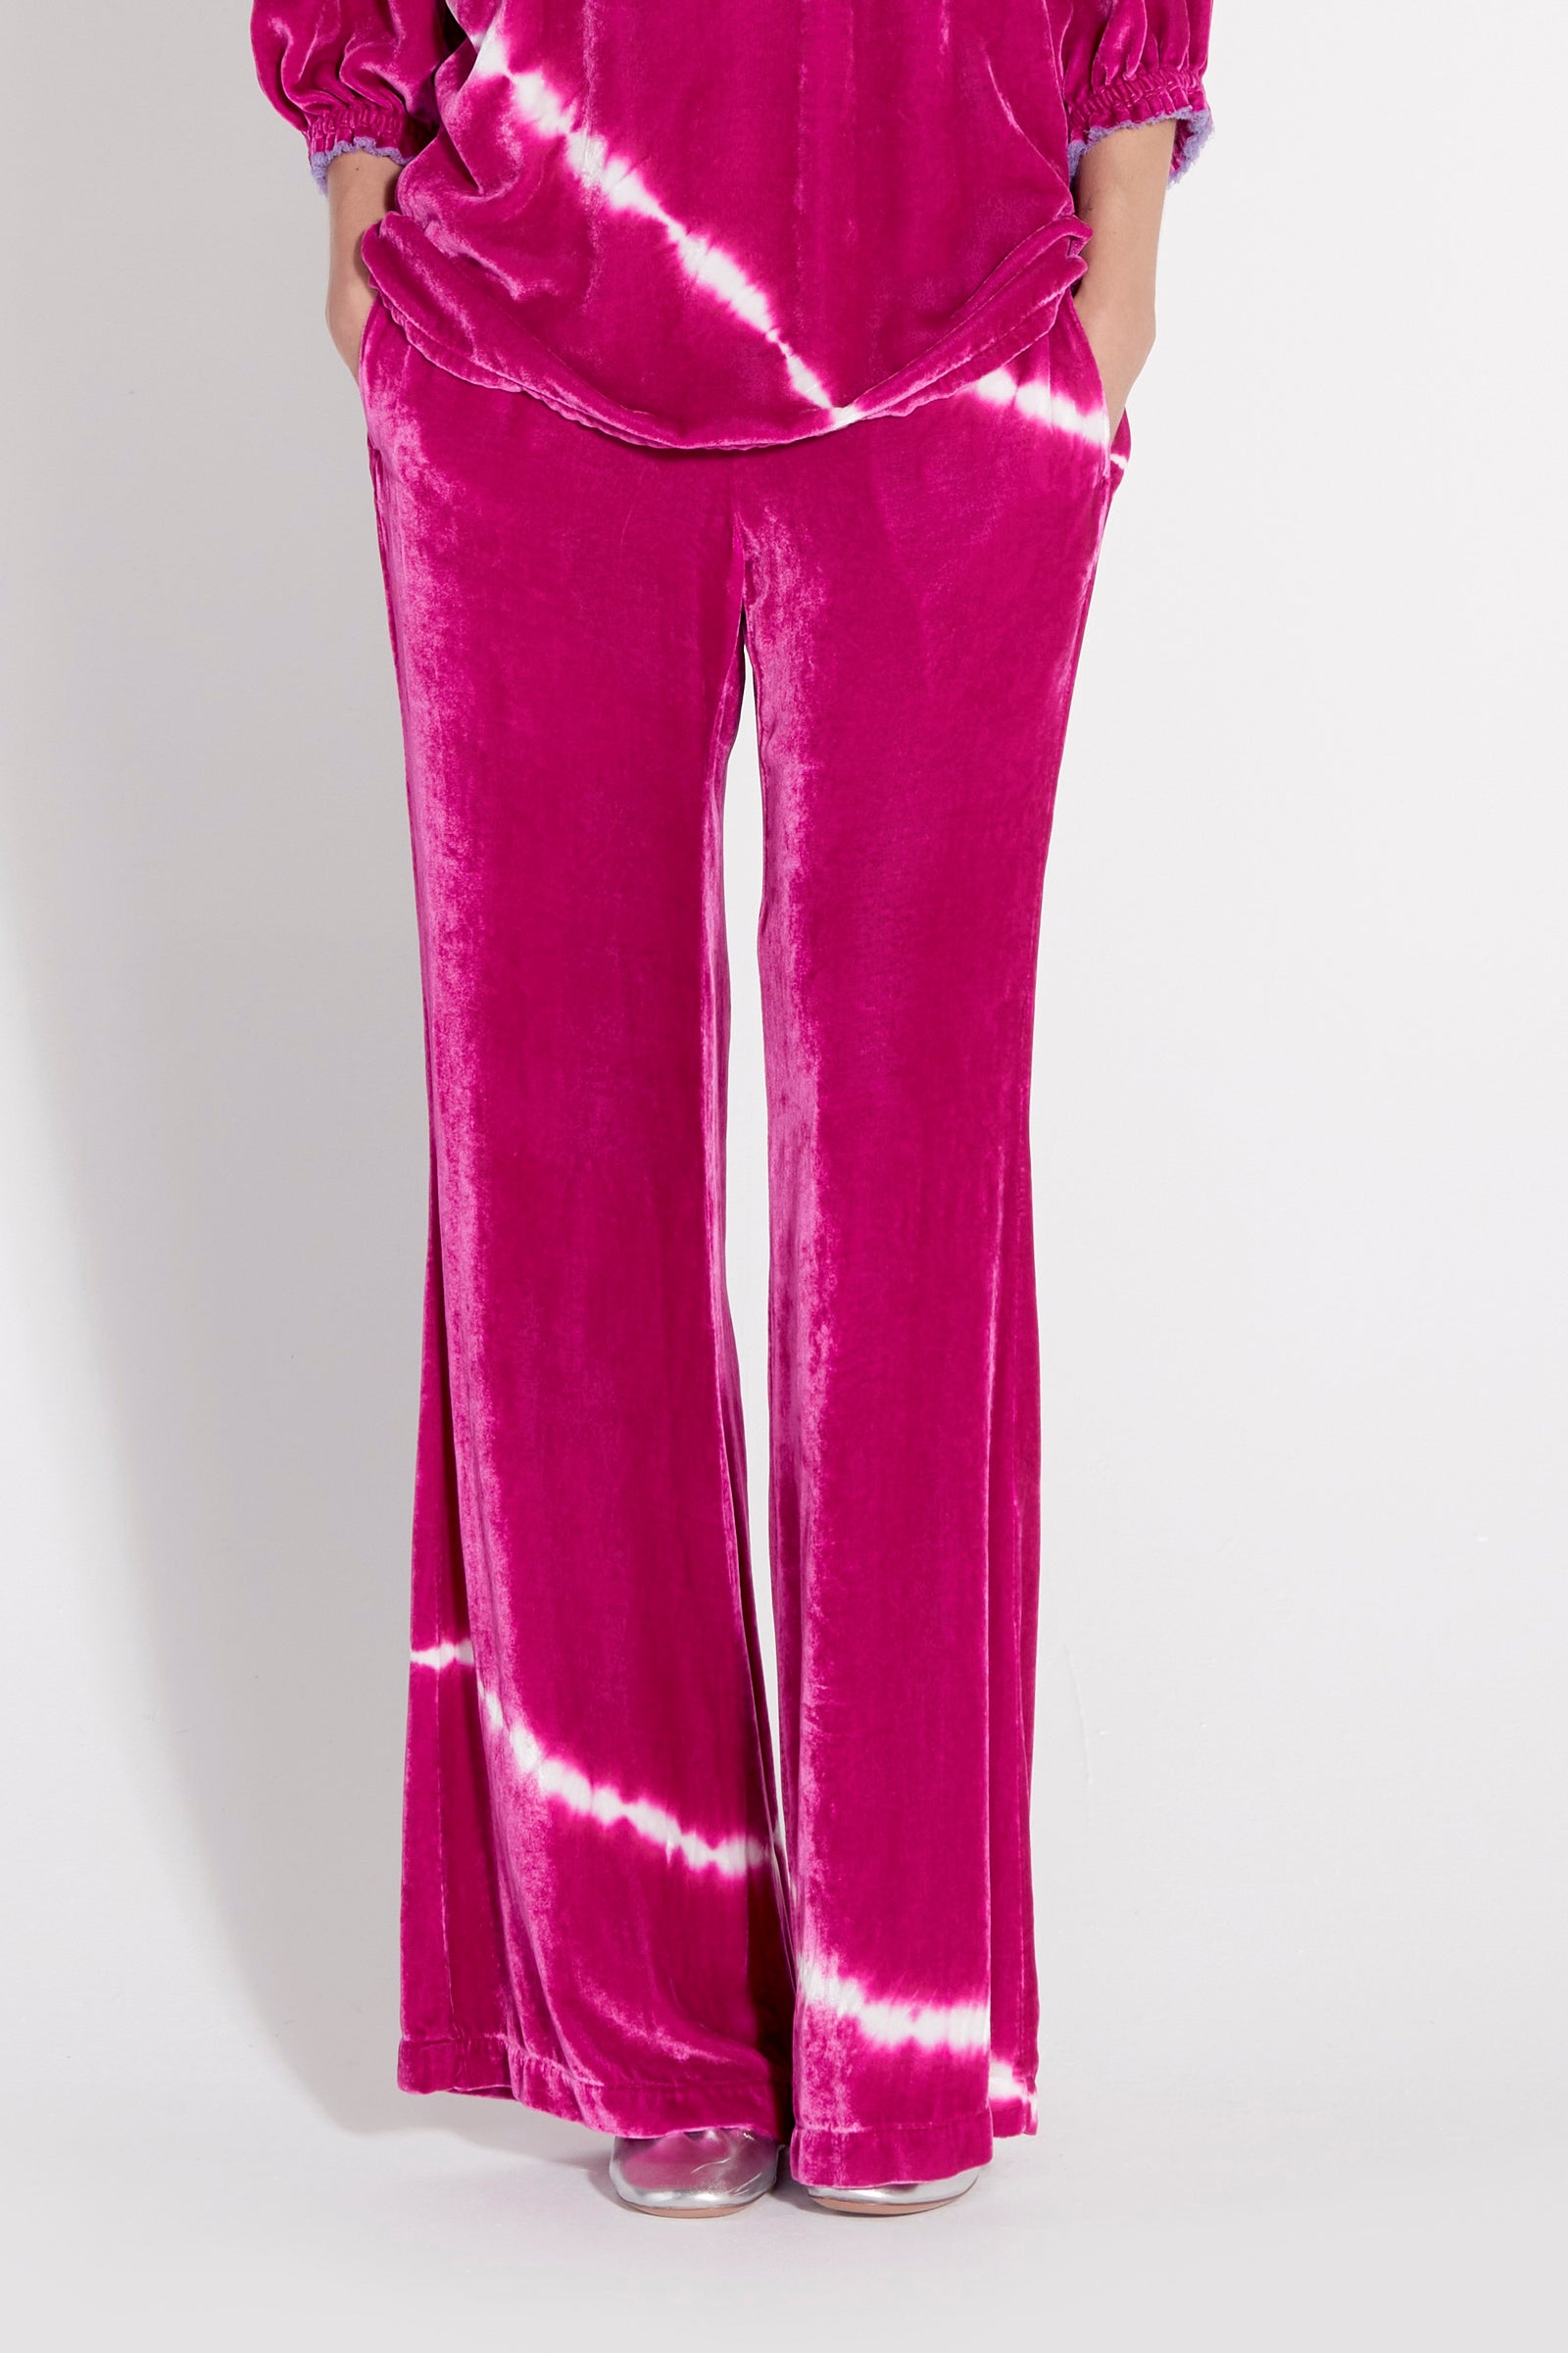 Dahlia Velvet Tie Dye Gia Pant Front Close-Up View